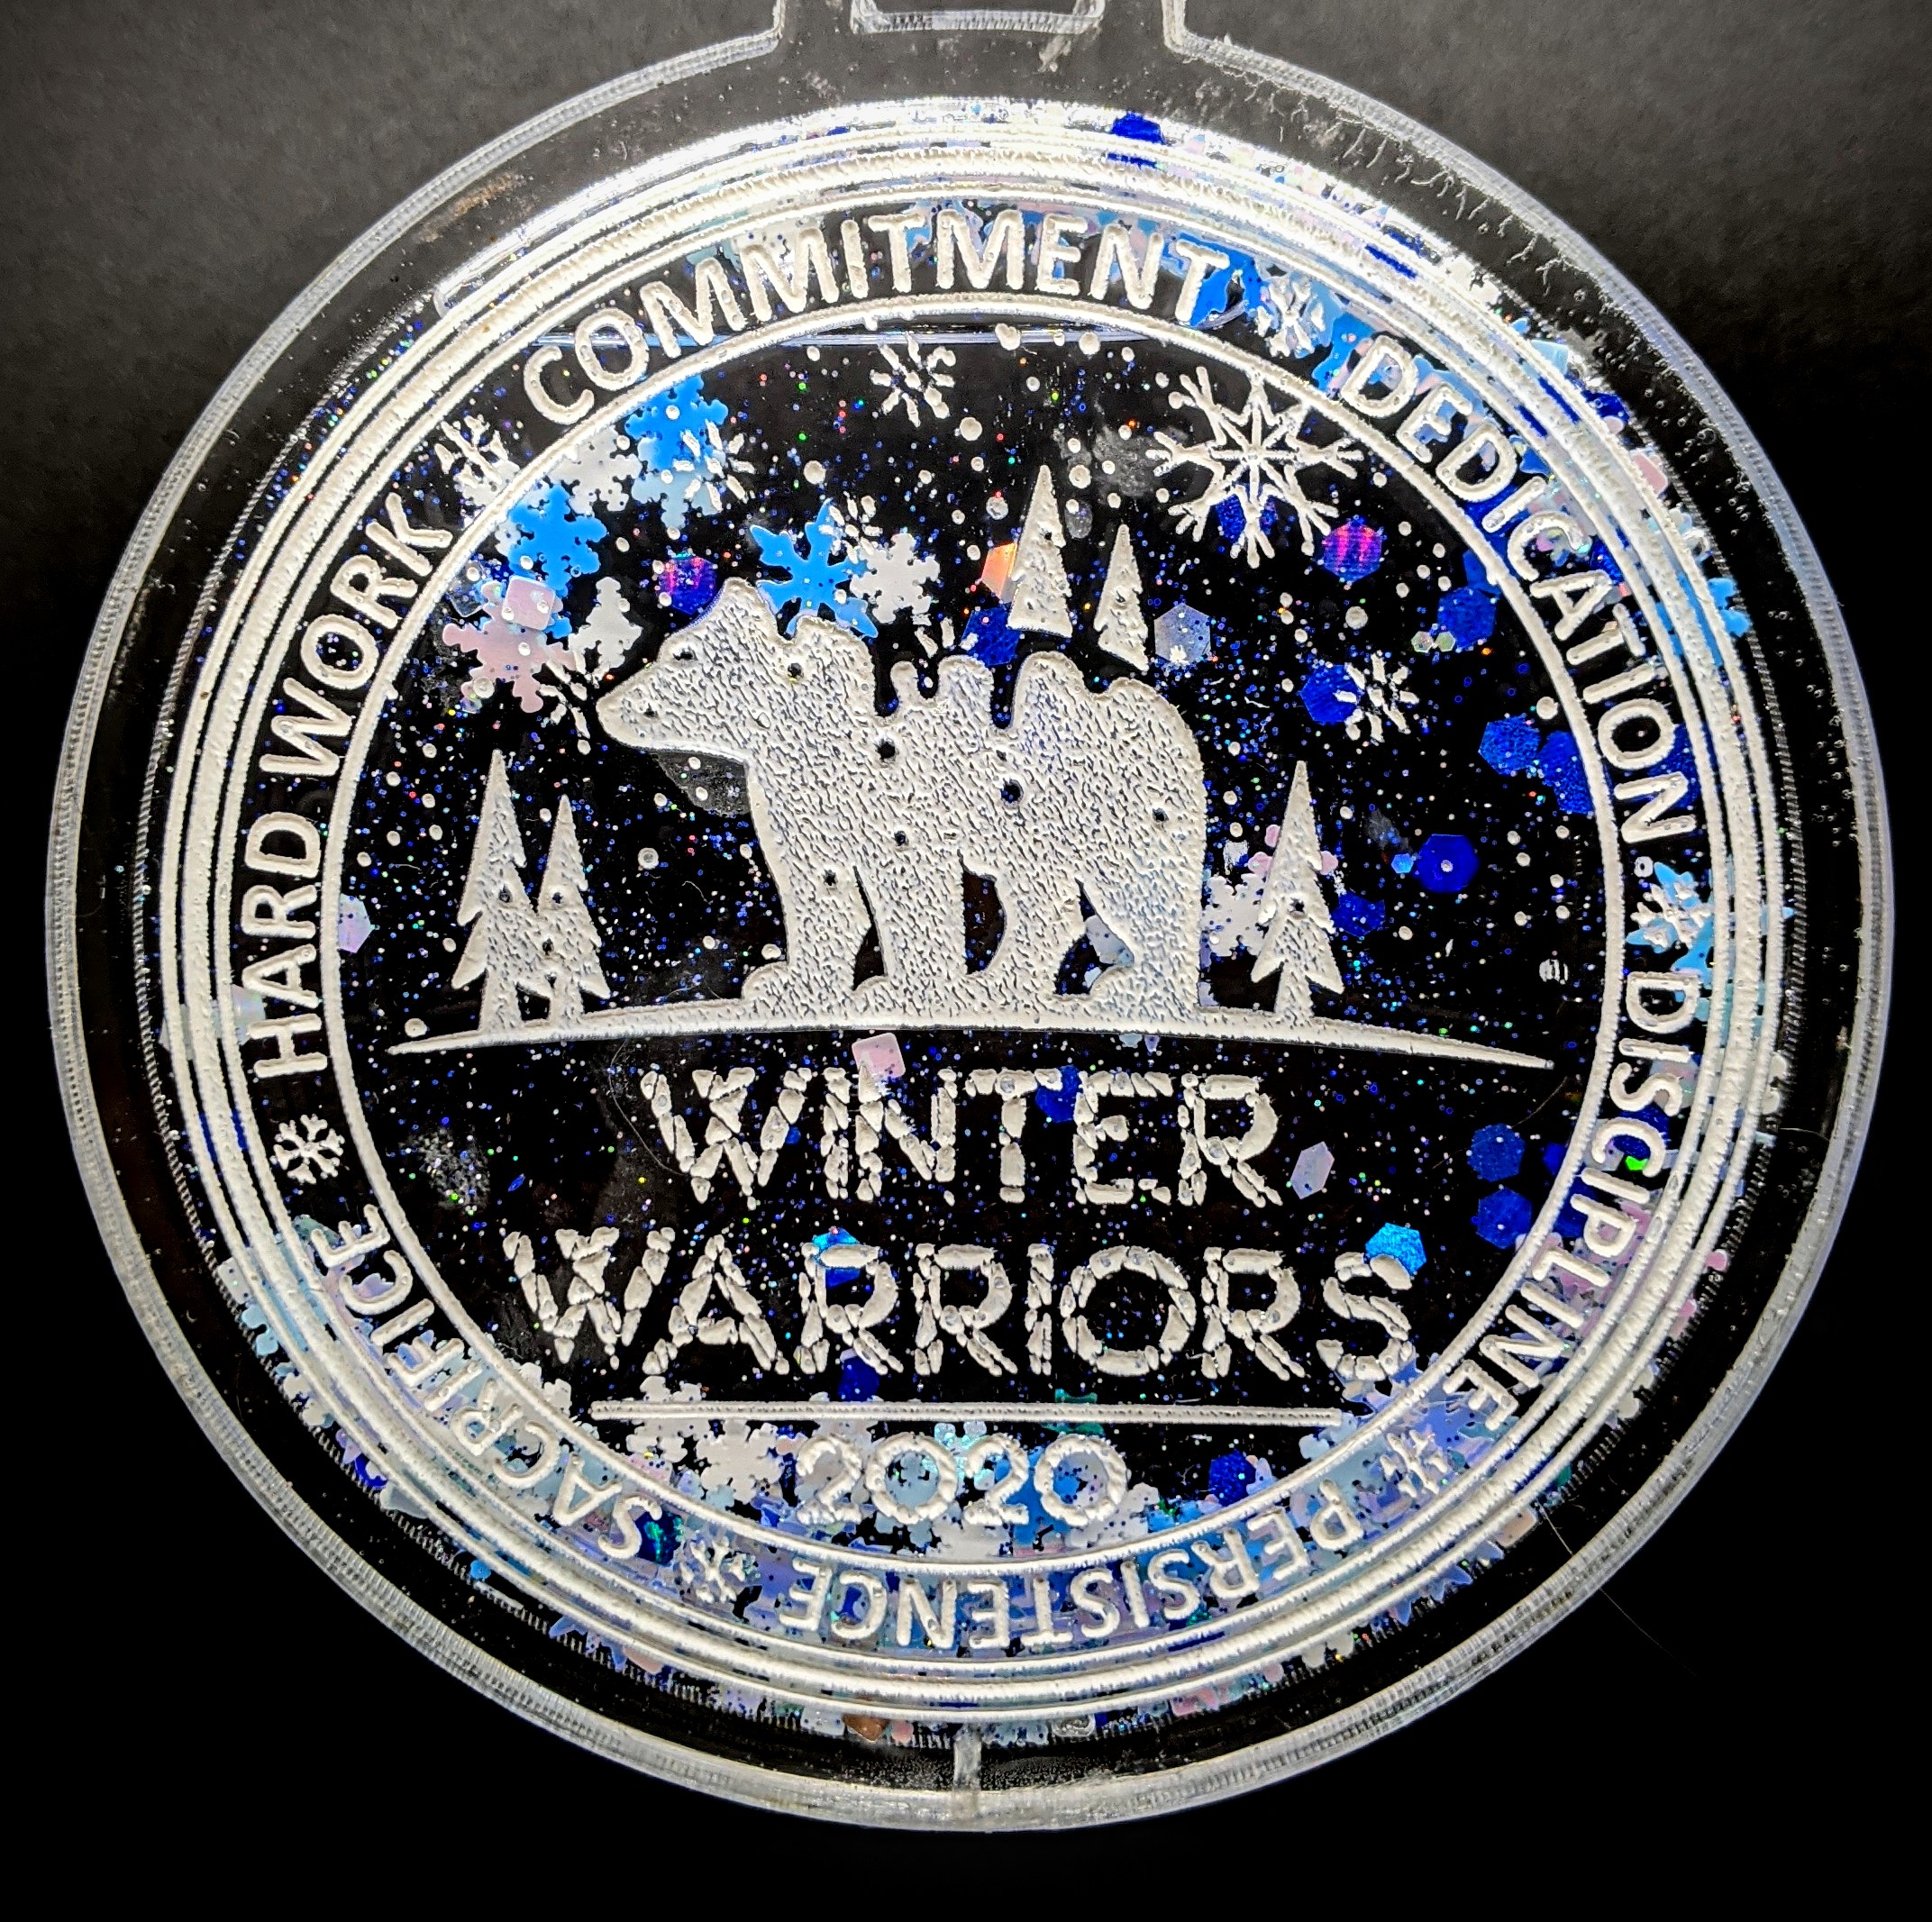 2020 Winter Warriors Medal